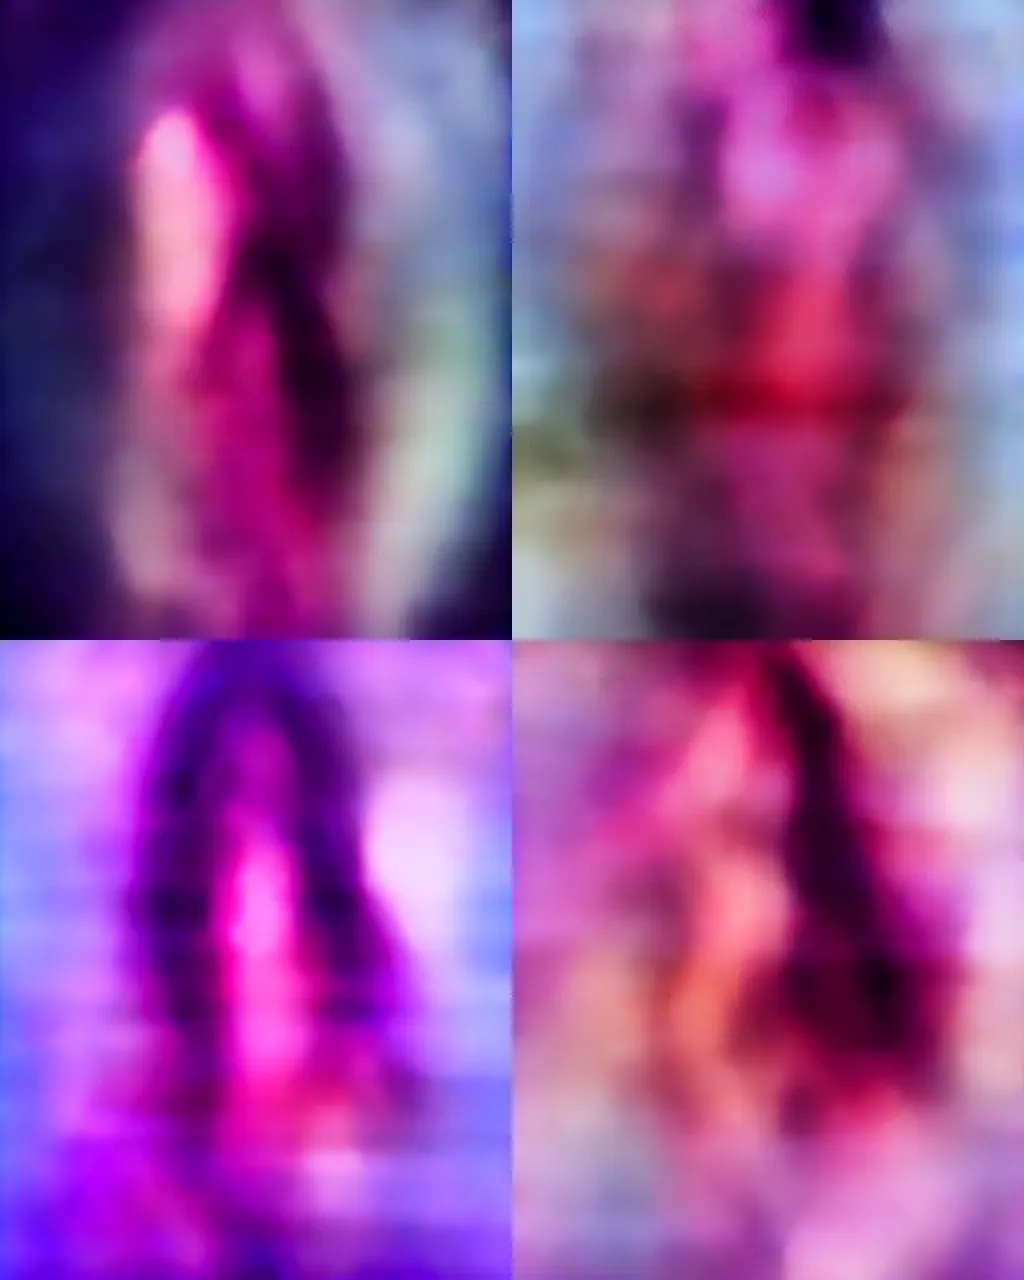 Image similar to beautiful Megan Fox purple hair tattoos symmetrical face eyes full body fantasy art icon, 2d art gta5 cover, official fanart behance hd artstation by Jesper Ejsing, by RHADS, Makoto Shinkai and Lois van baarle, ilya kuvshinov, rossdraws